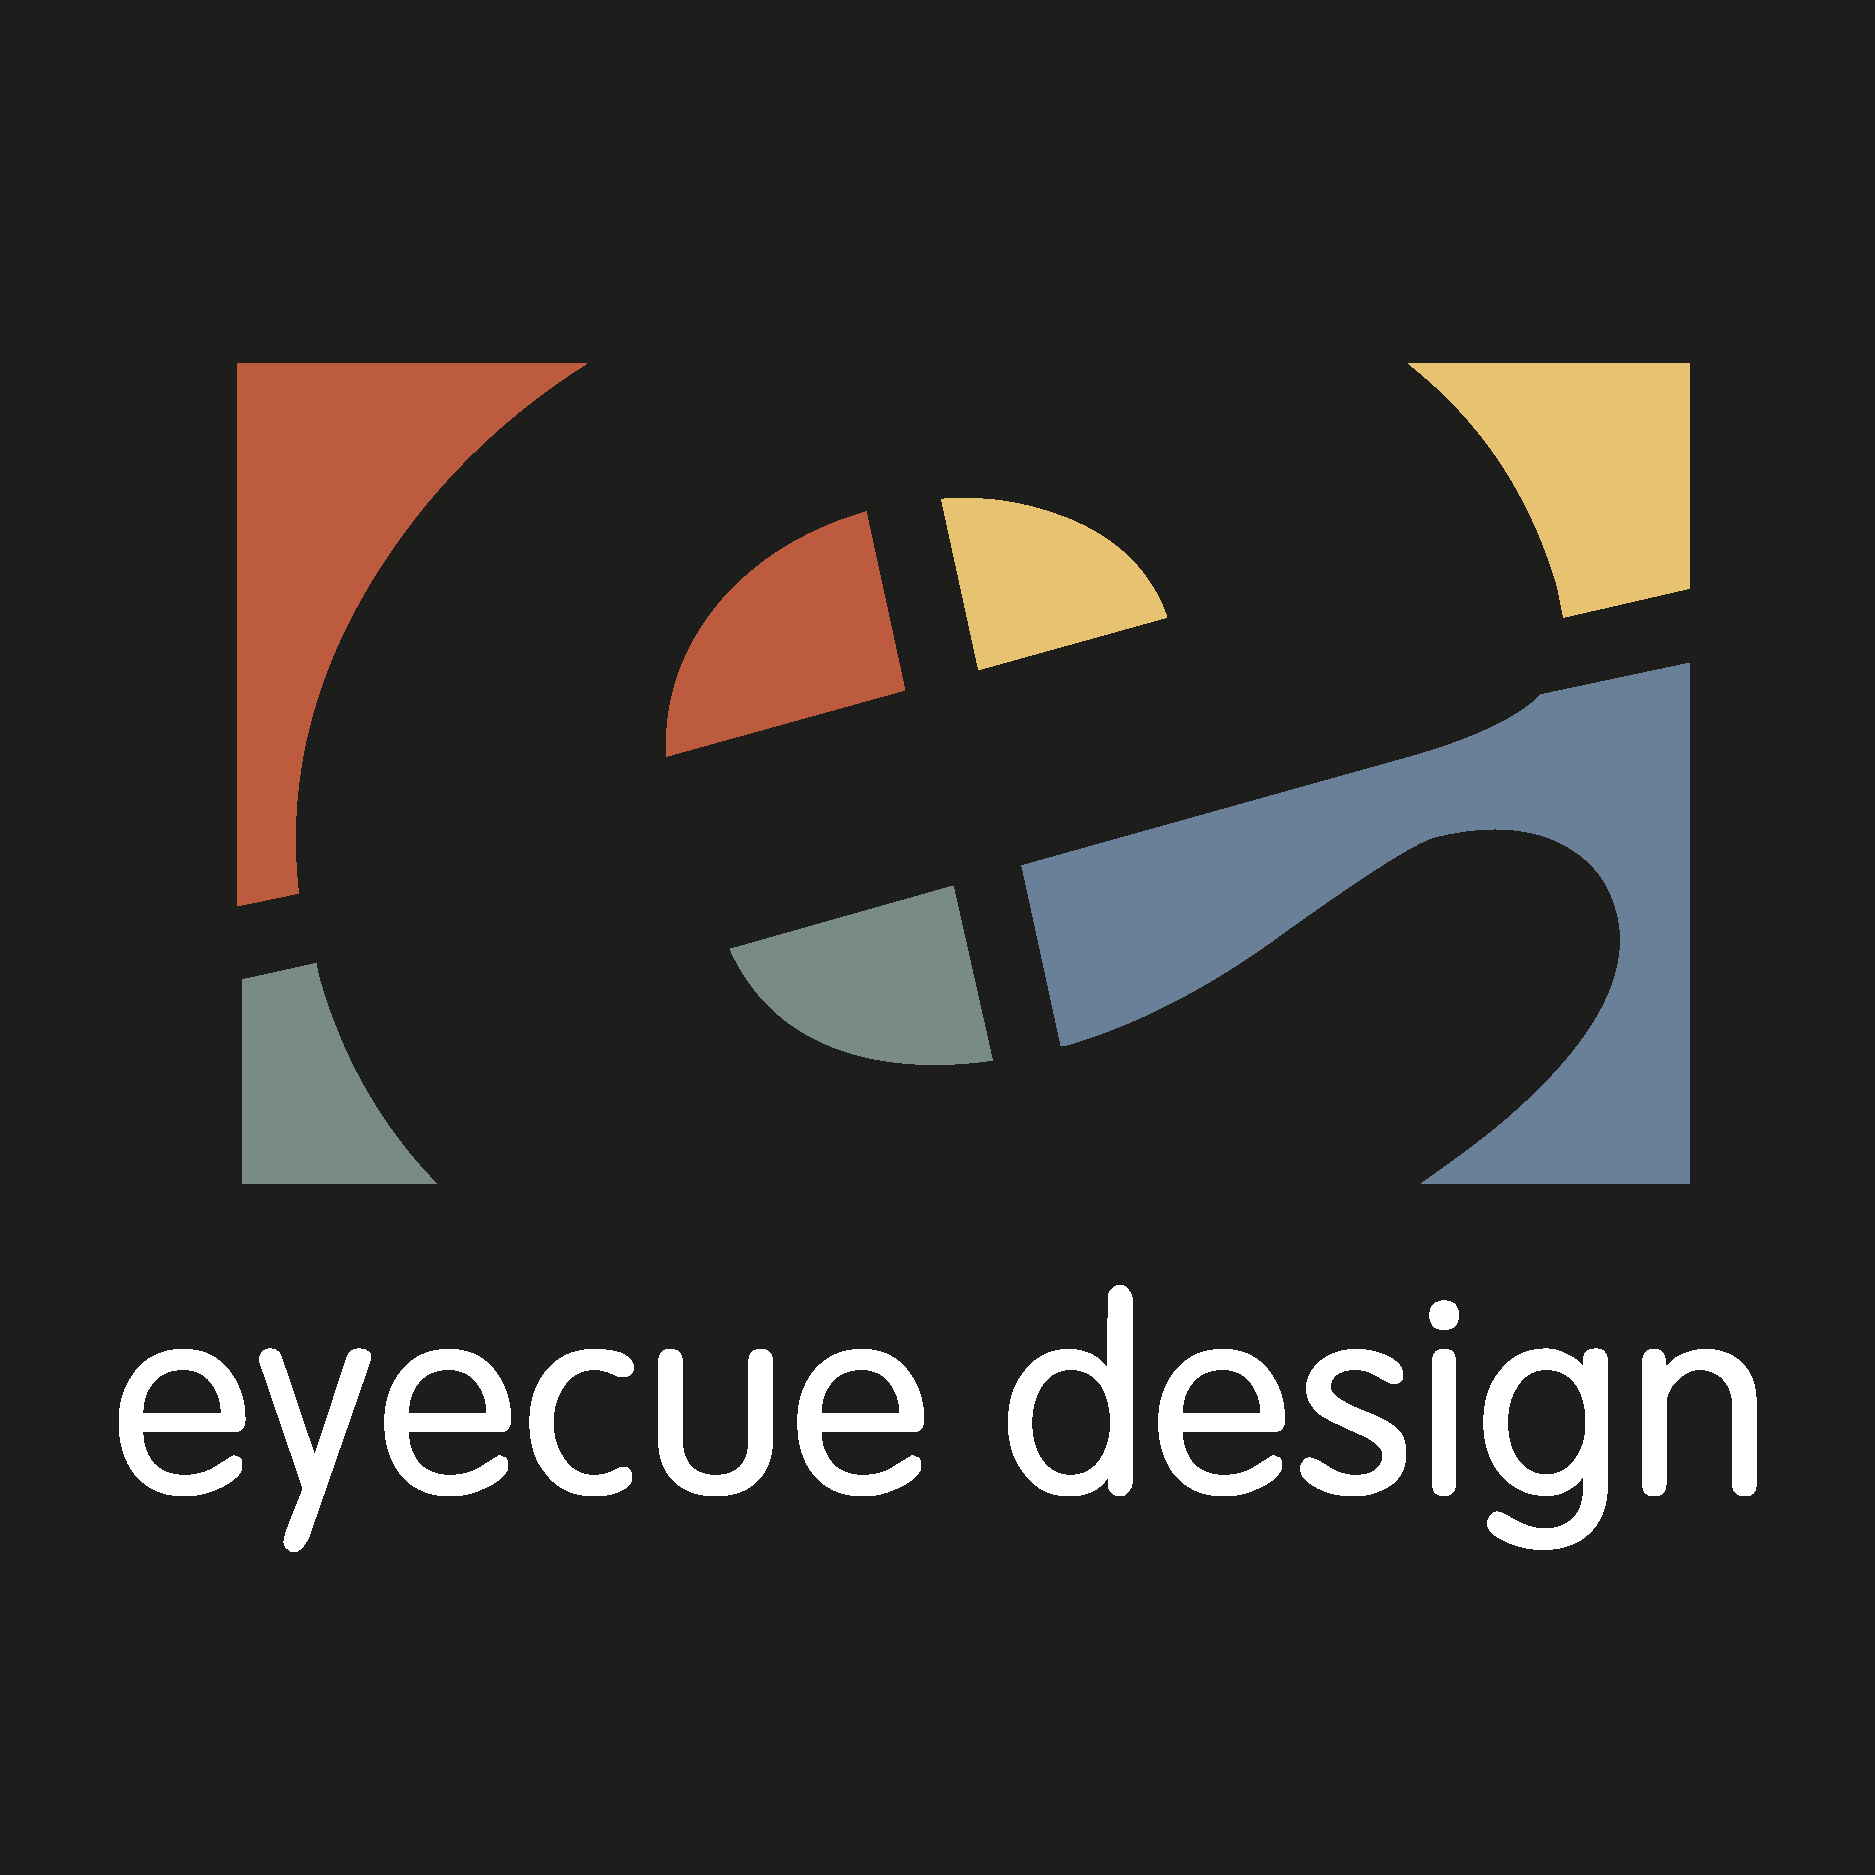 Eyecue Design Logo Vector.svg